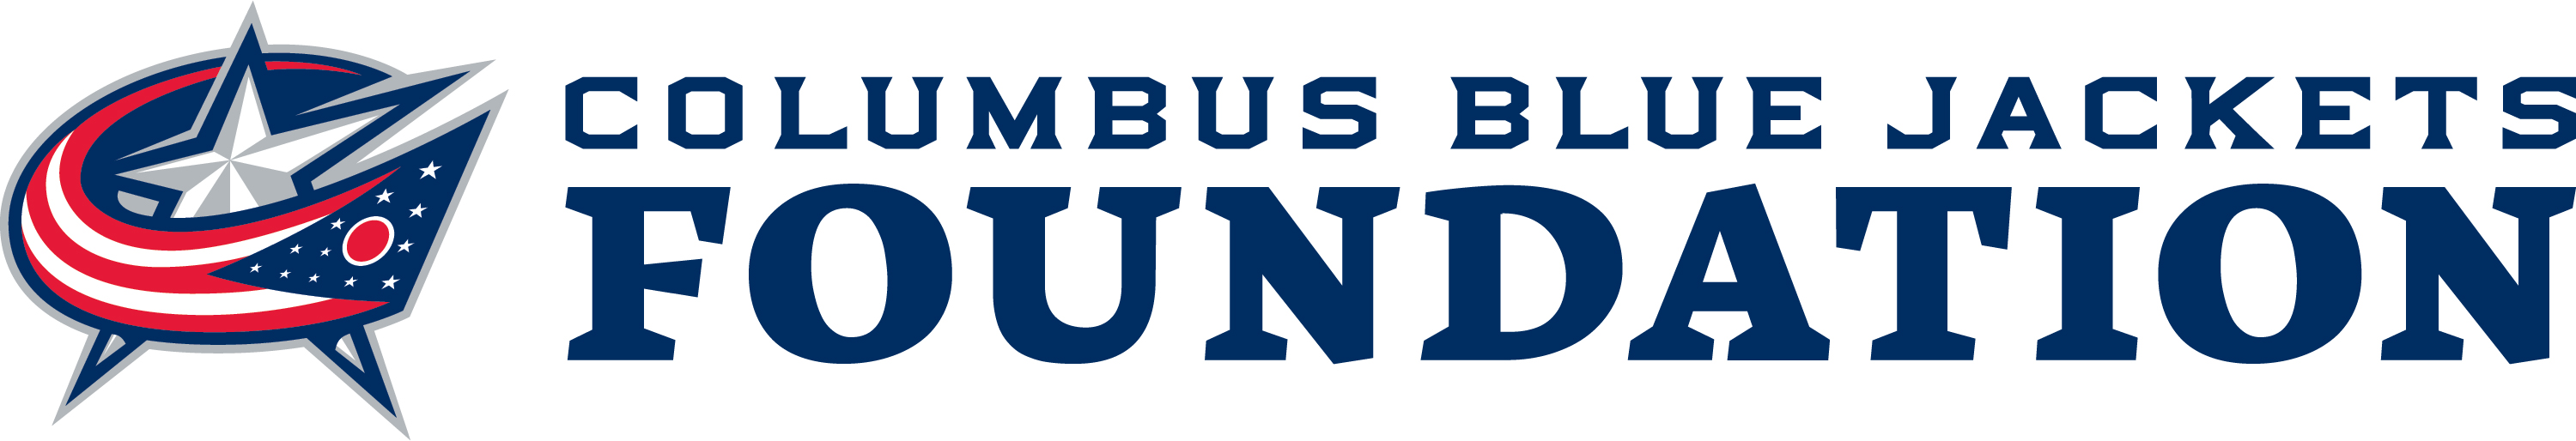 The Columbus Blue Jackets Foundation